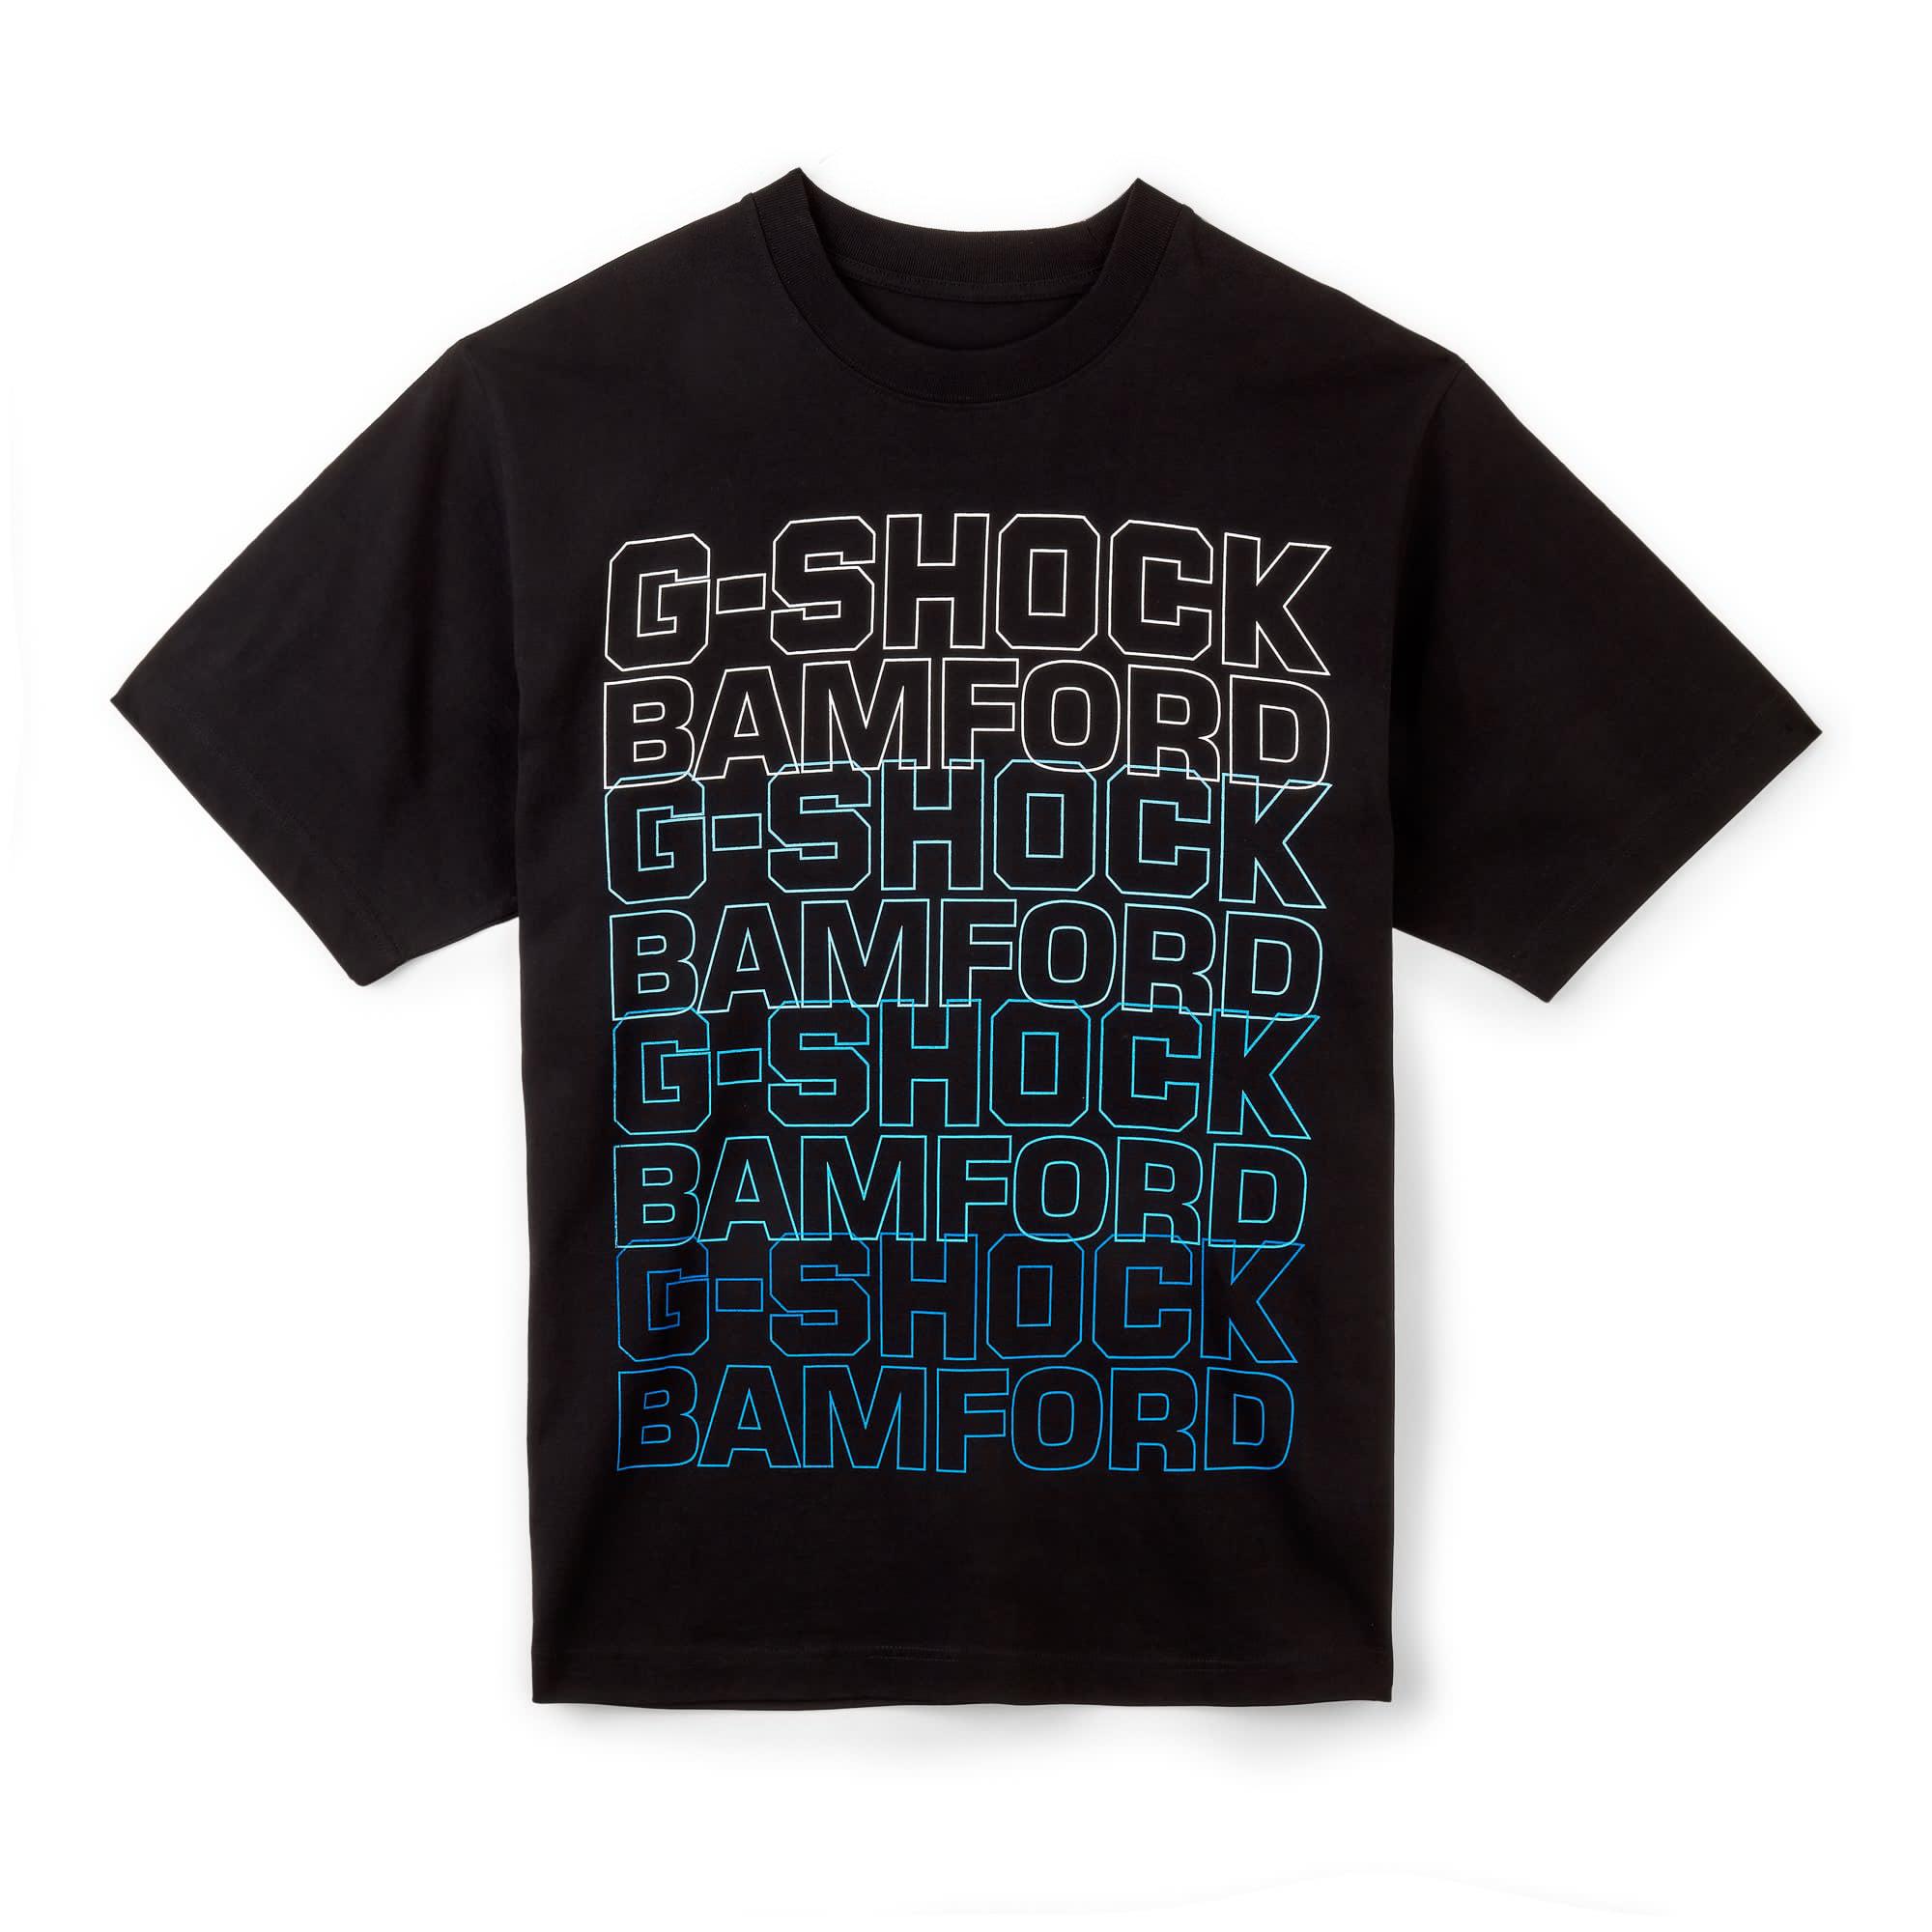 Bamford x Casio G-Shock T-Shirt (Black) by BAMFORD WATCHES